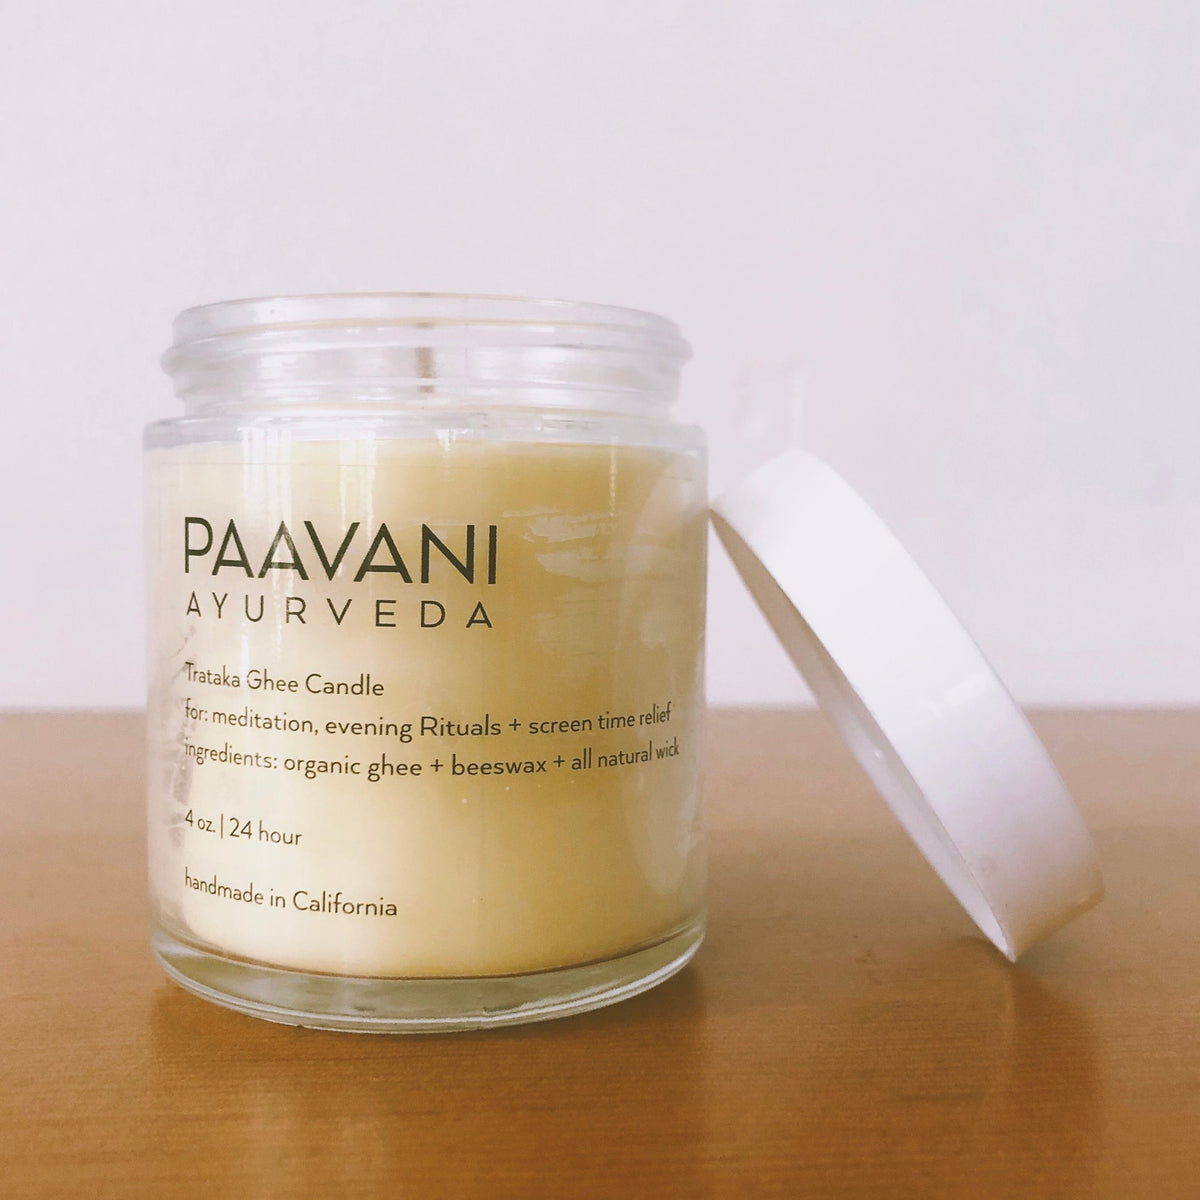 Paavani Ayurveda - Trataka Ghee Candle, Organic Ghee, Coconut Wax, Ayurvedic Ritual